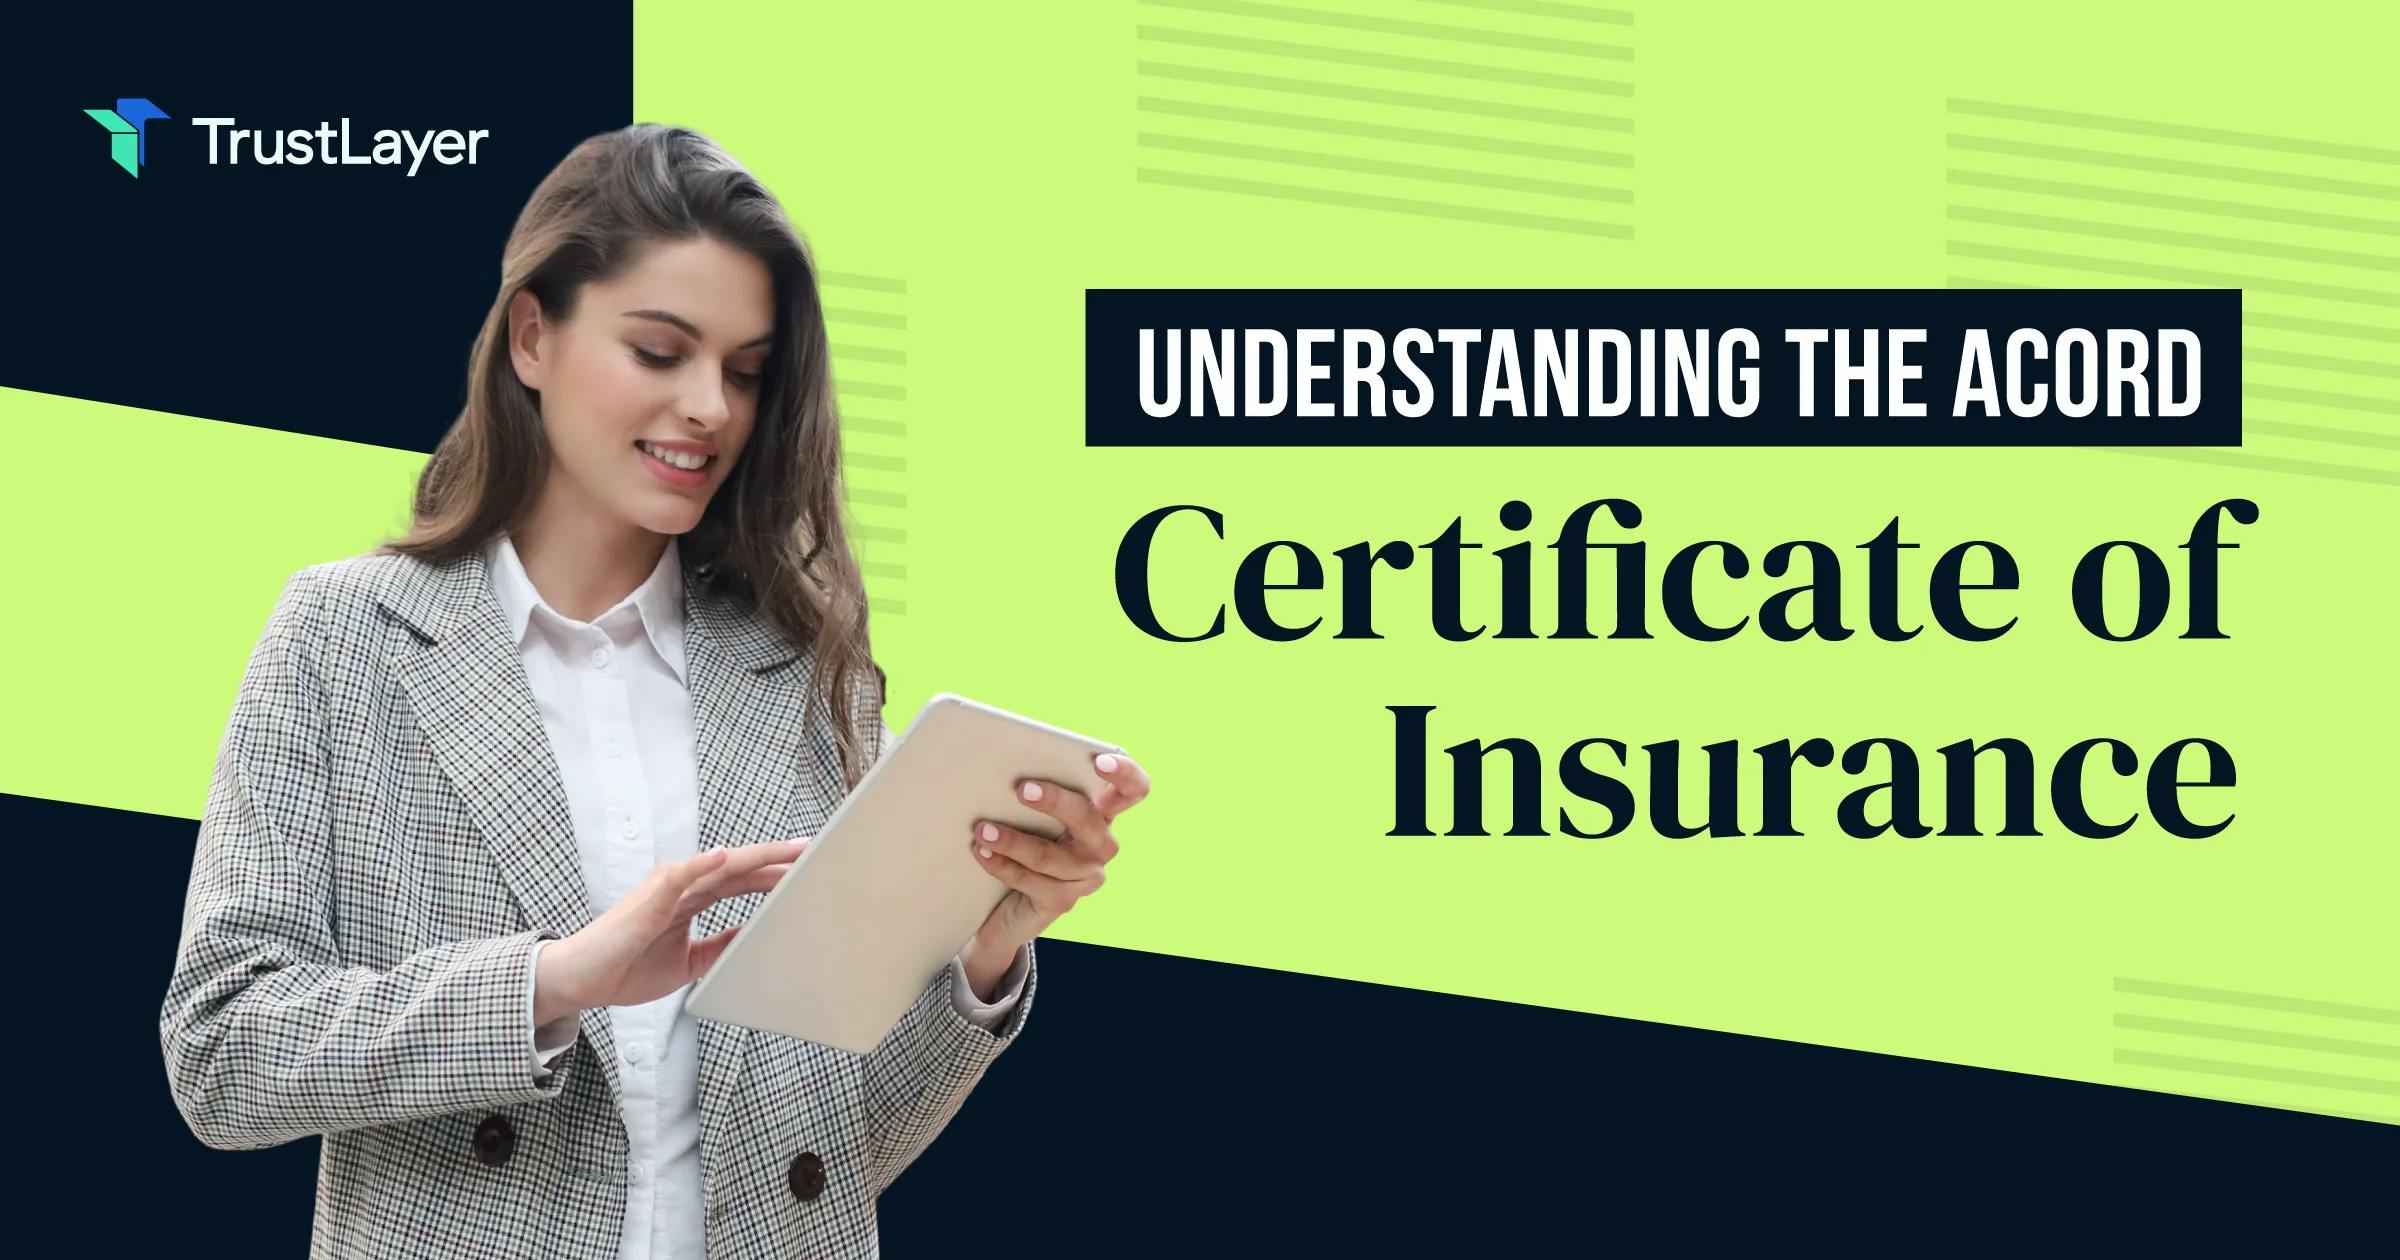  Understanding the Acord Certificate of Insurance